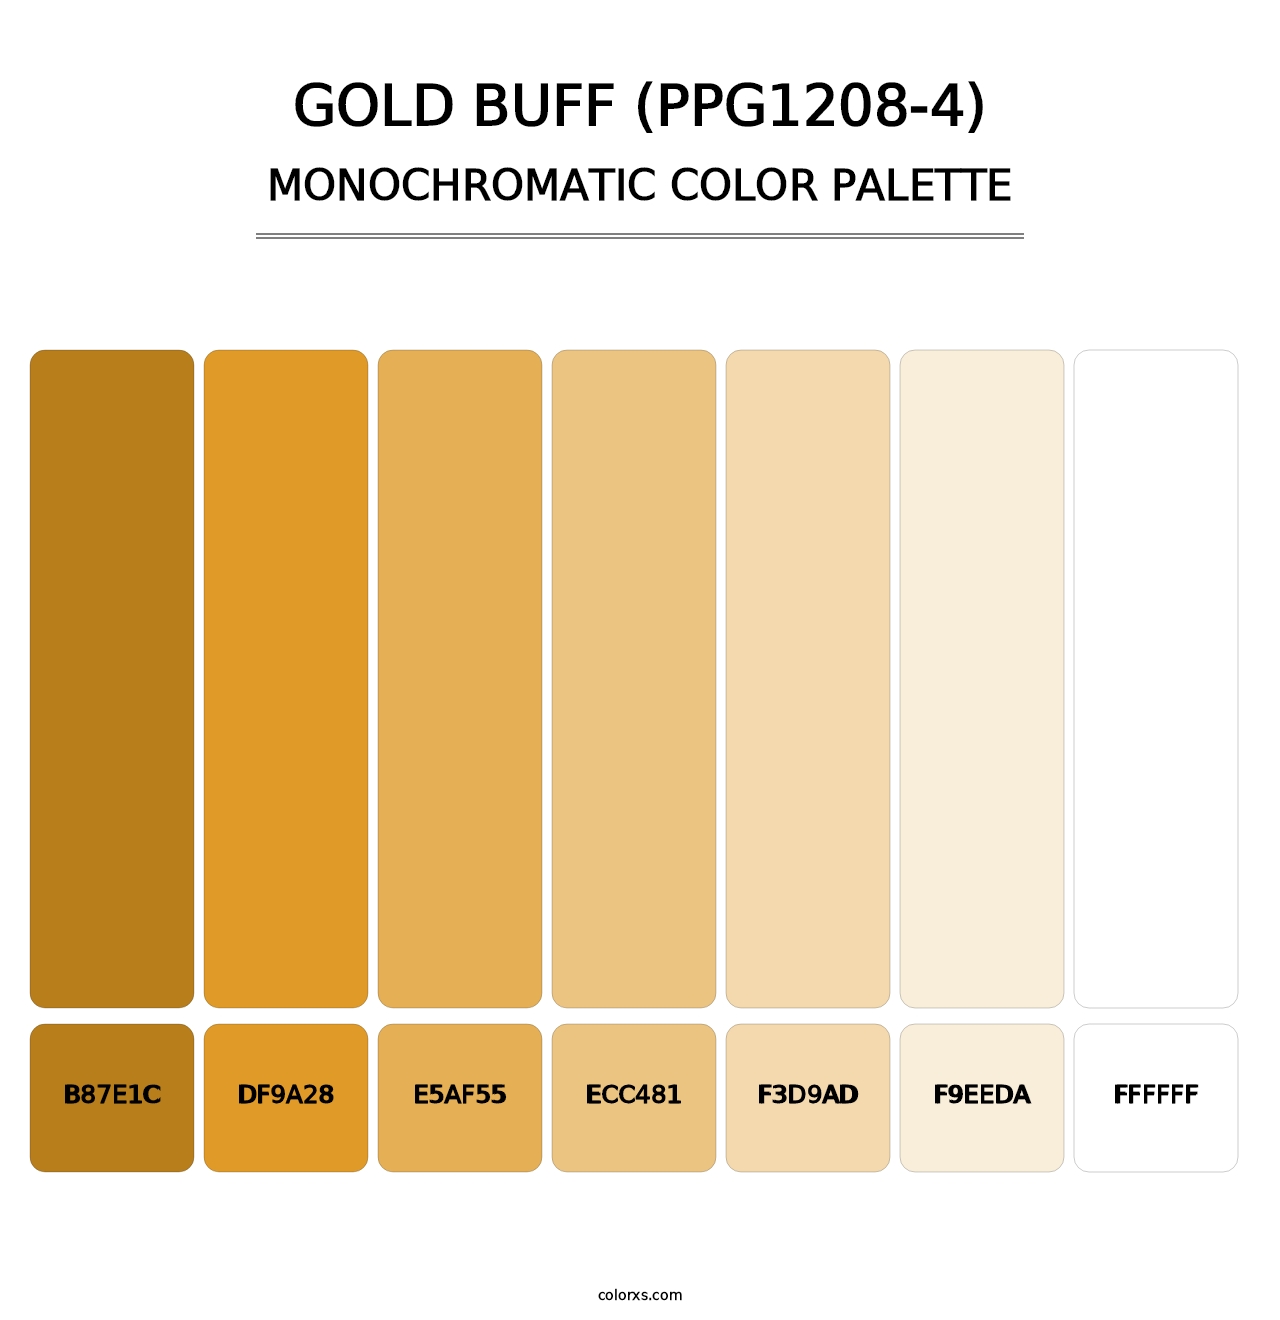 Gold Buff (PPG1208-4) - Monochromatic Color Palette